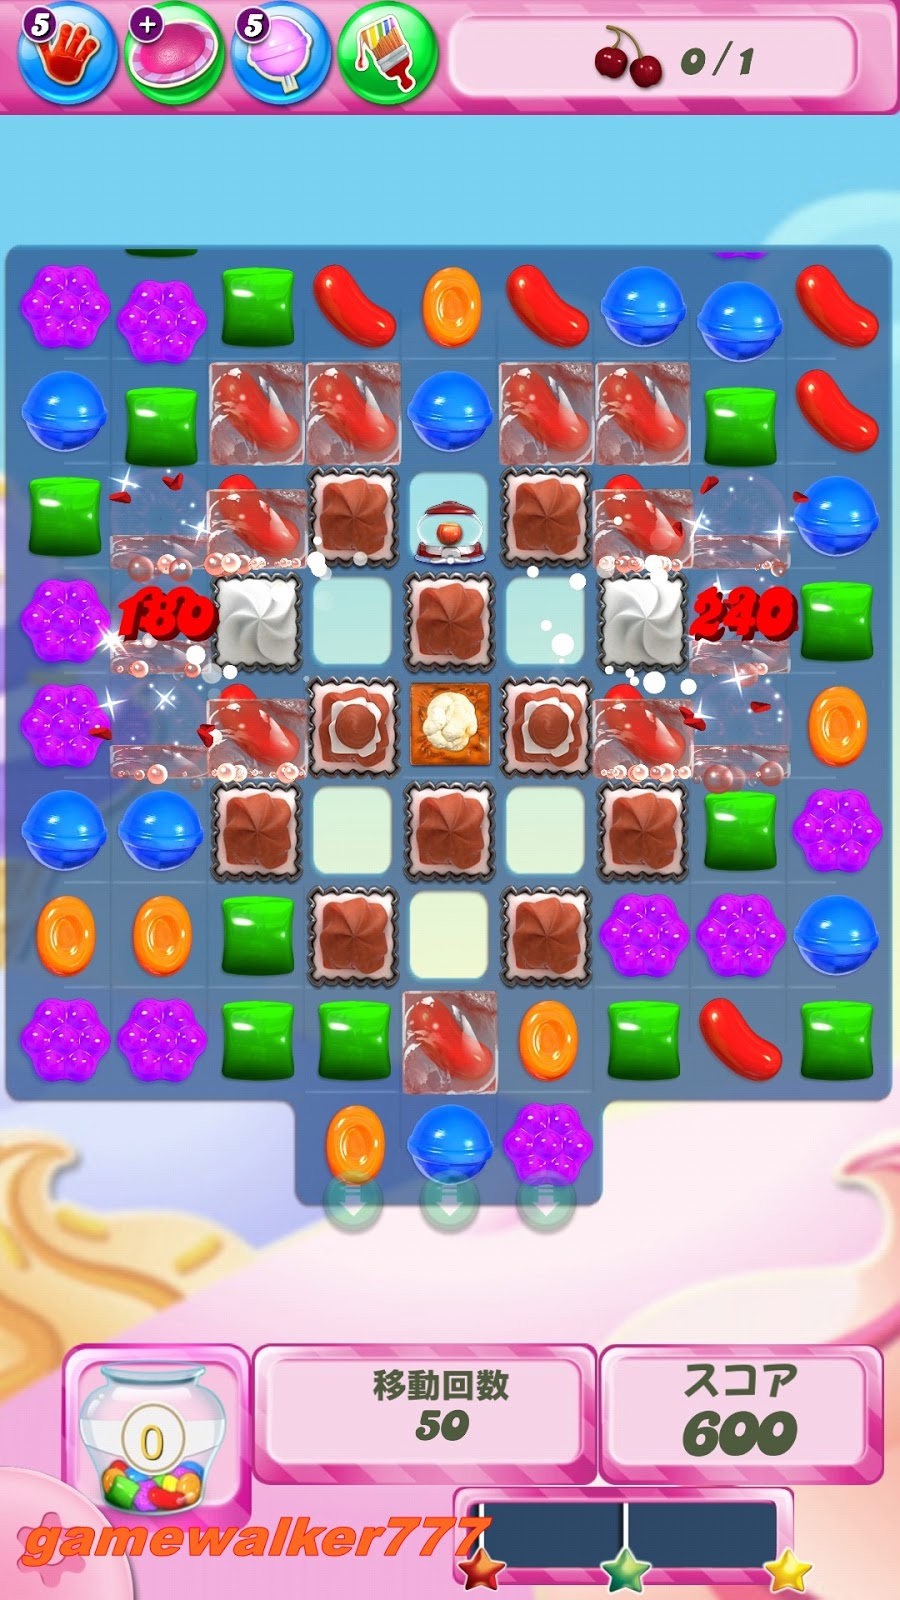 Candy Crush Saga Android版 をまったり攻略するblog レベル1129 攻略 キャンディークラッシュサーガ